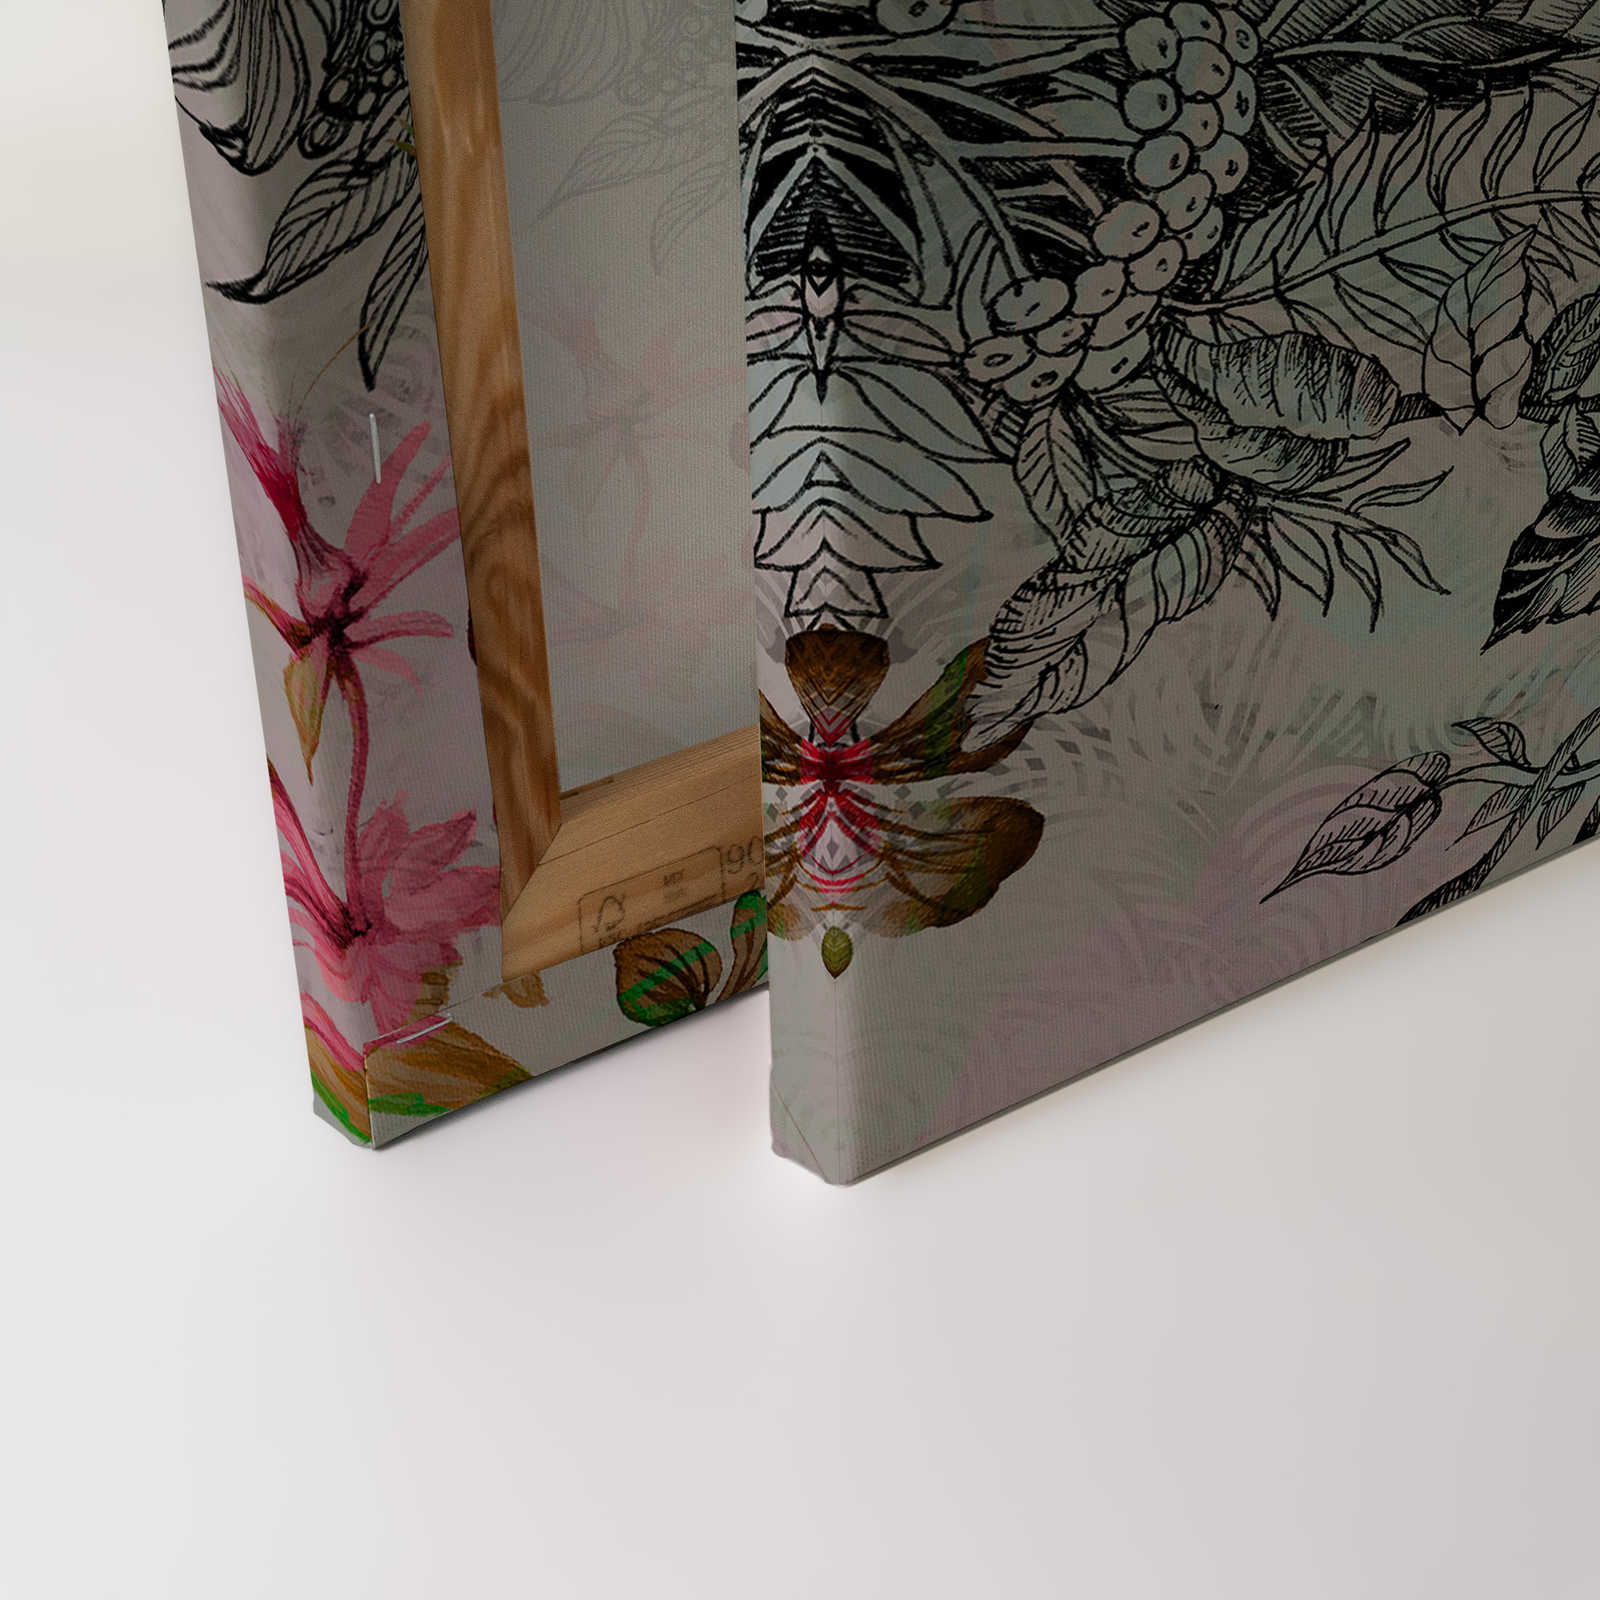             Leinwandbild Vögel & Blumen im Collage Stil – 0,90 m x 0,60 m
        